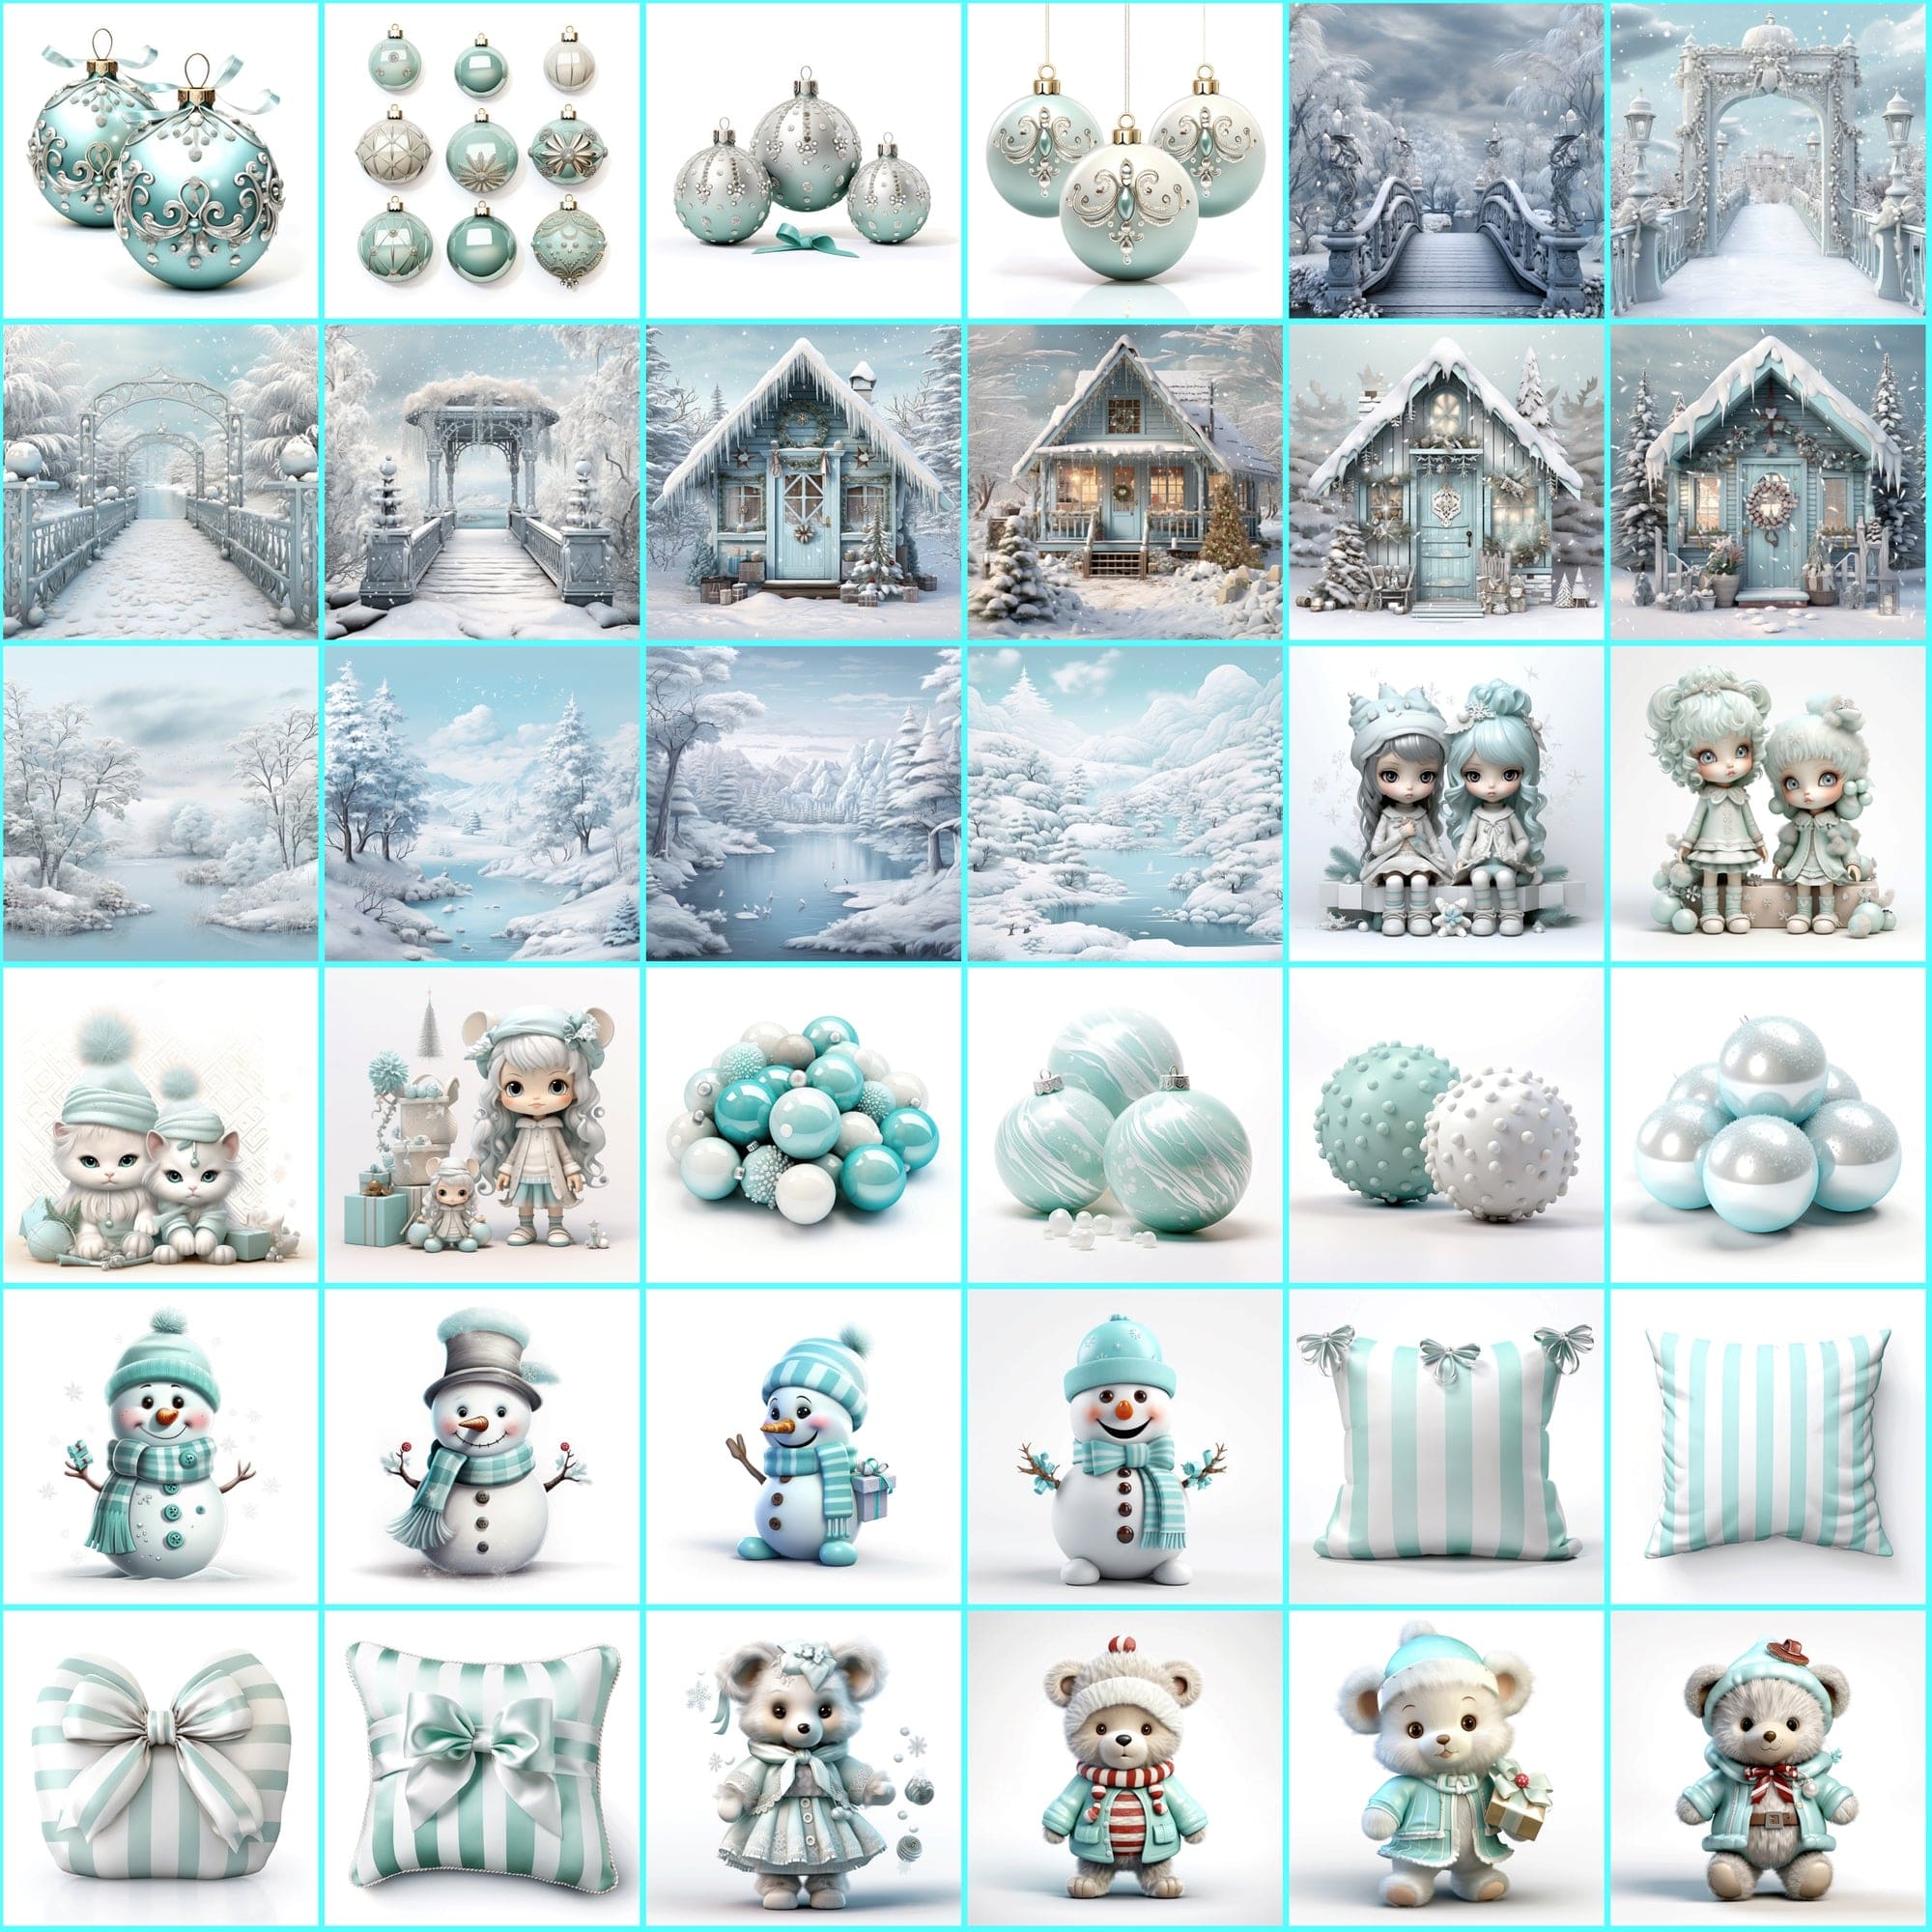 Turquoise Christmas Images: 340 PNG Image Bundle with Commercial License Digital Download Sumobundle